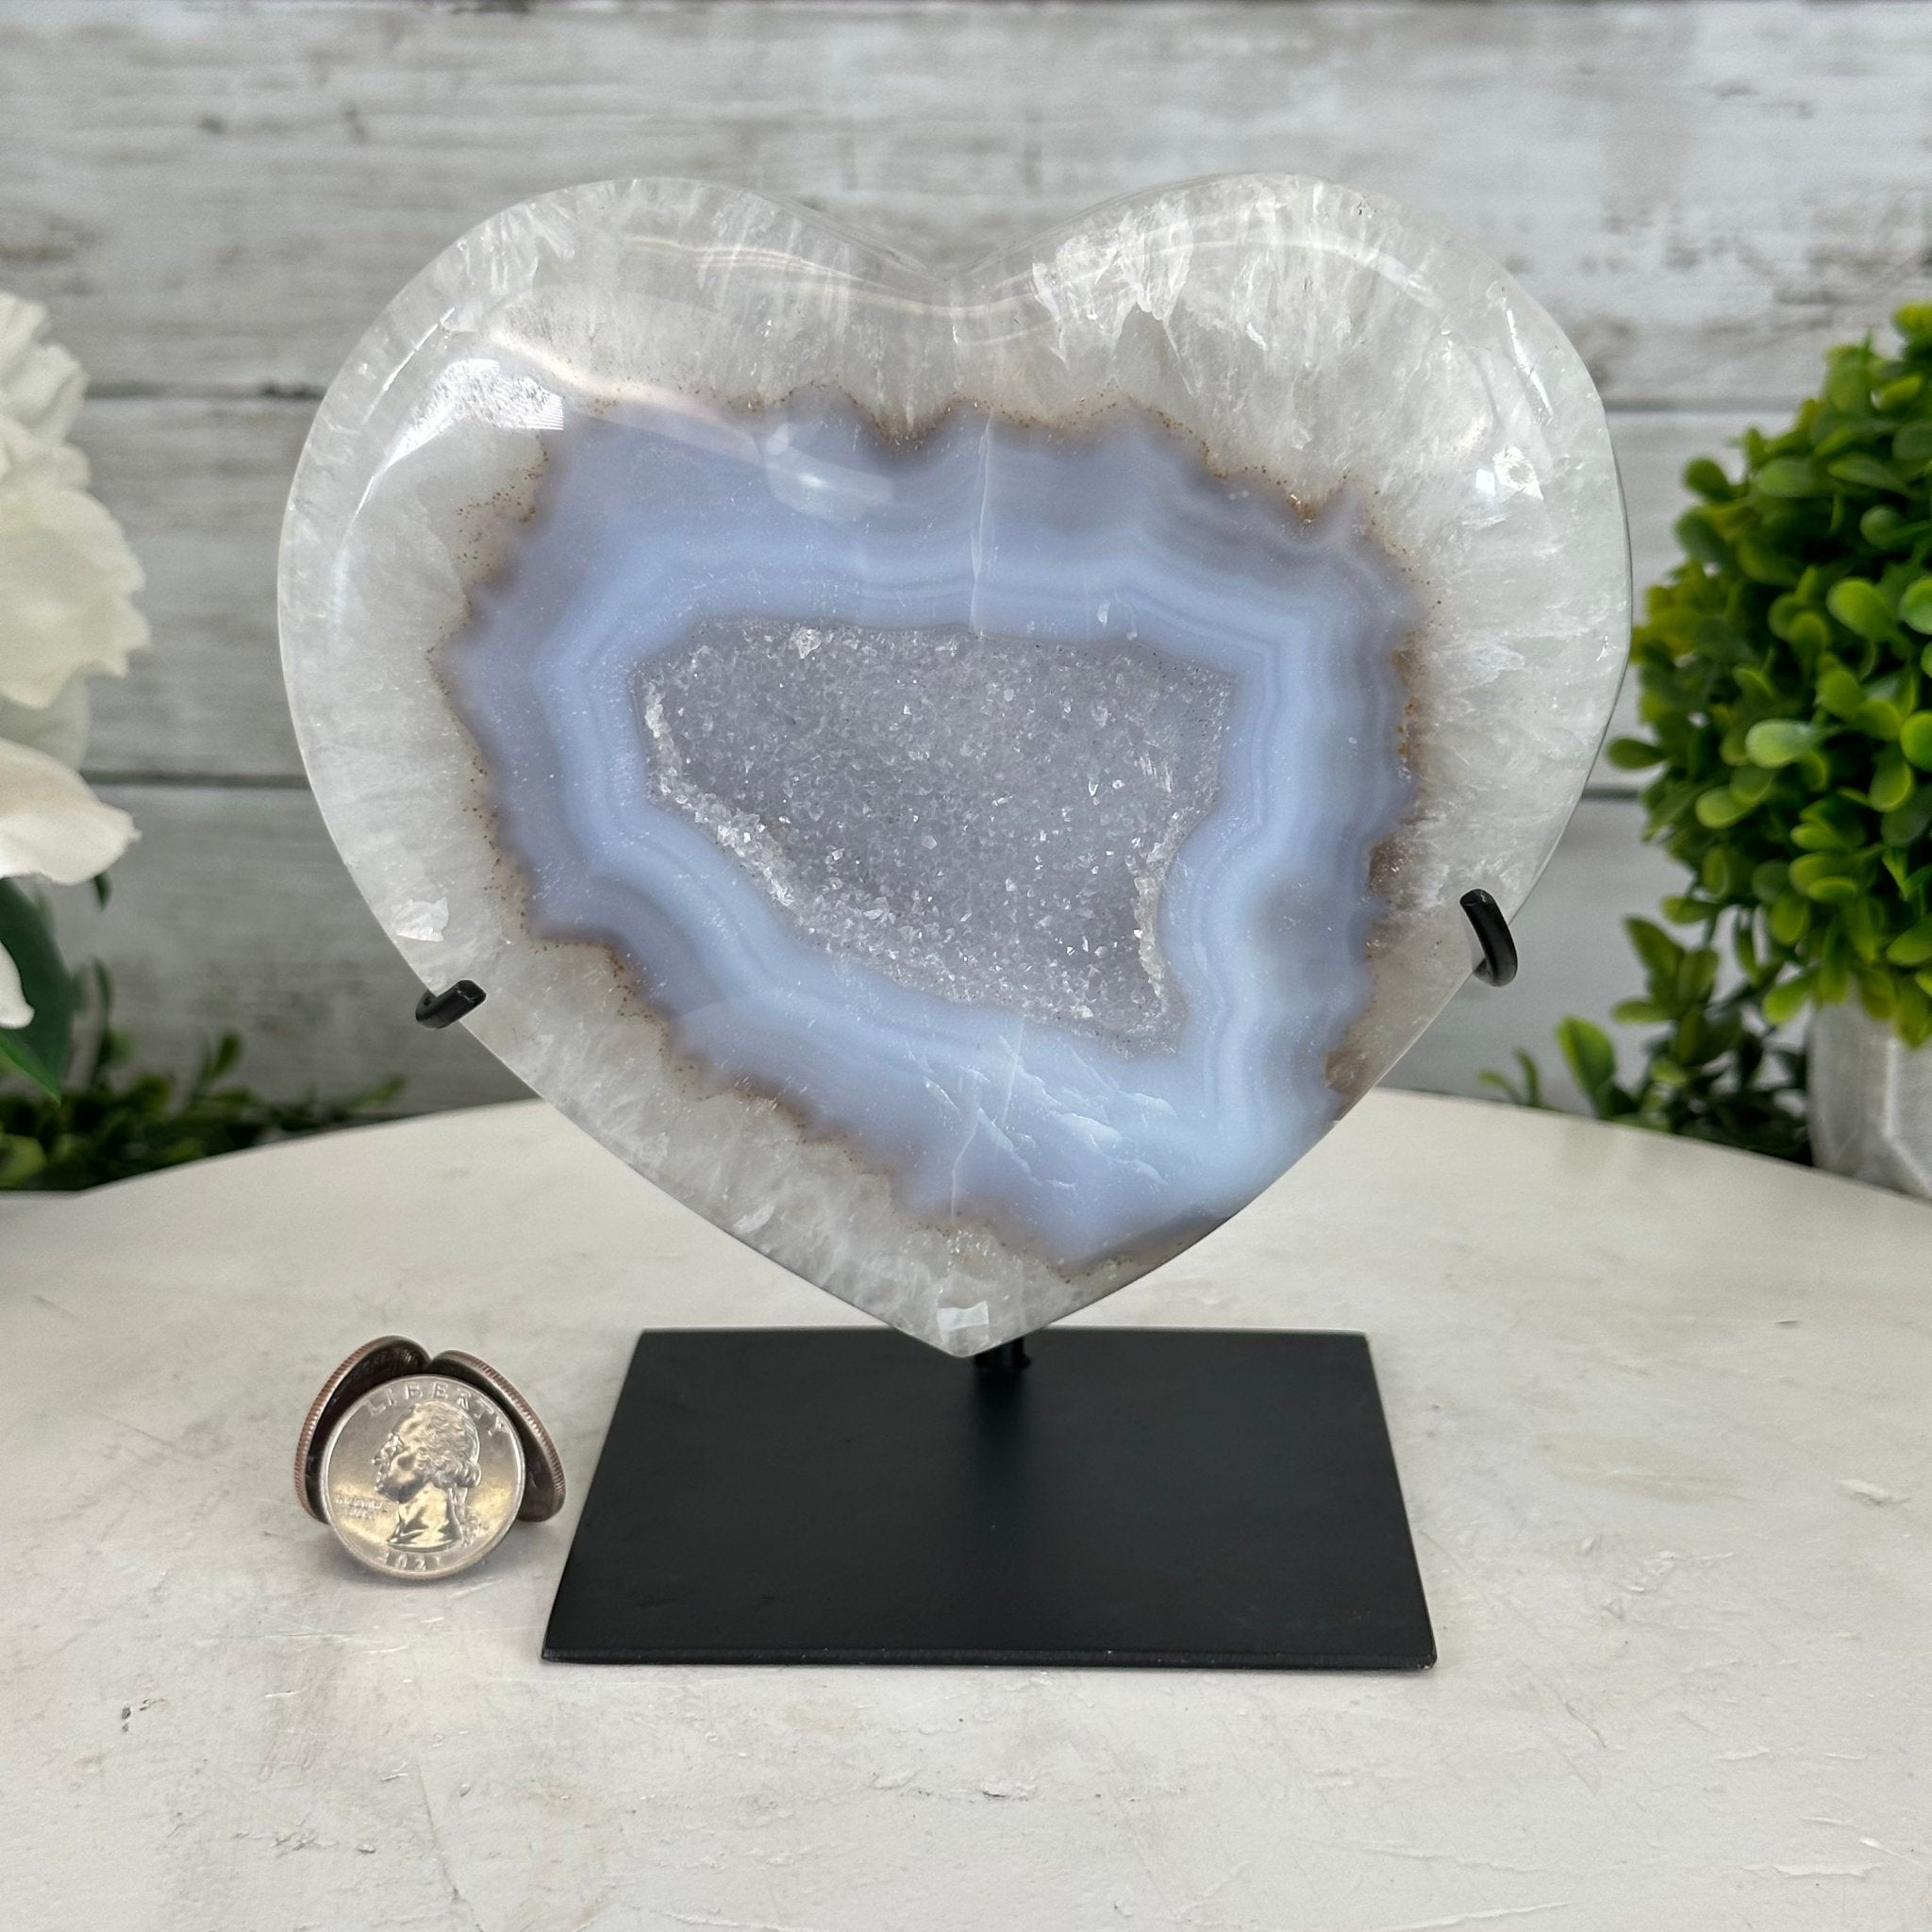 Polished Agate Heart Geode on a Metal Stand, 4.6 lbs & 6.7" Tall, Model #5468-0071 by Brazil Gems - Brazil GemsBrazil GemsPolished Agate Heart Geode on a Metal Stand, 4.6 lbs & 6.7" Tall, Model #5468-0071 by Brazil GemsHearts5468-0071